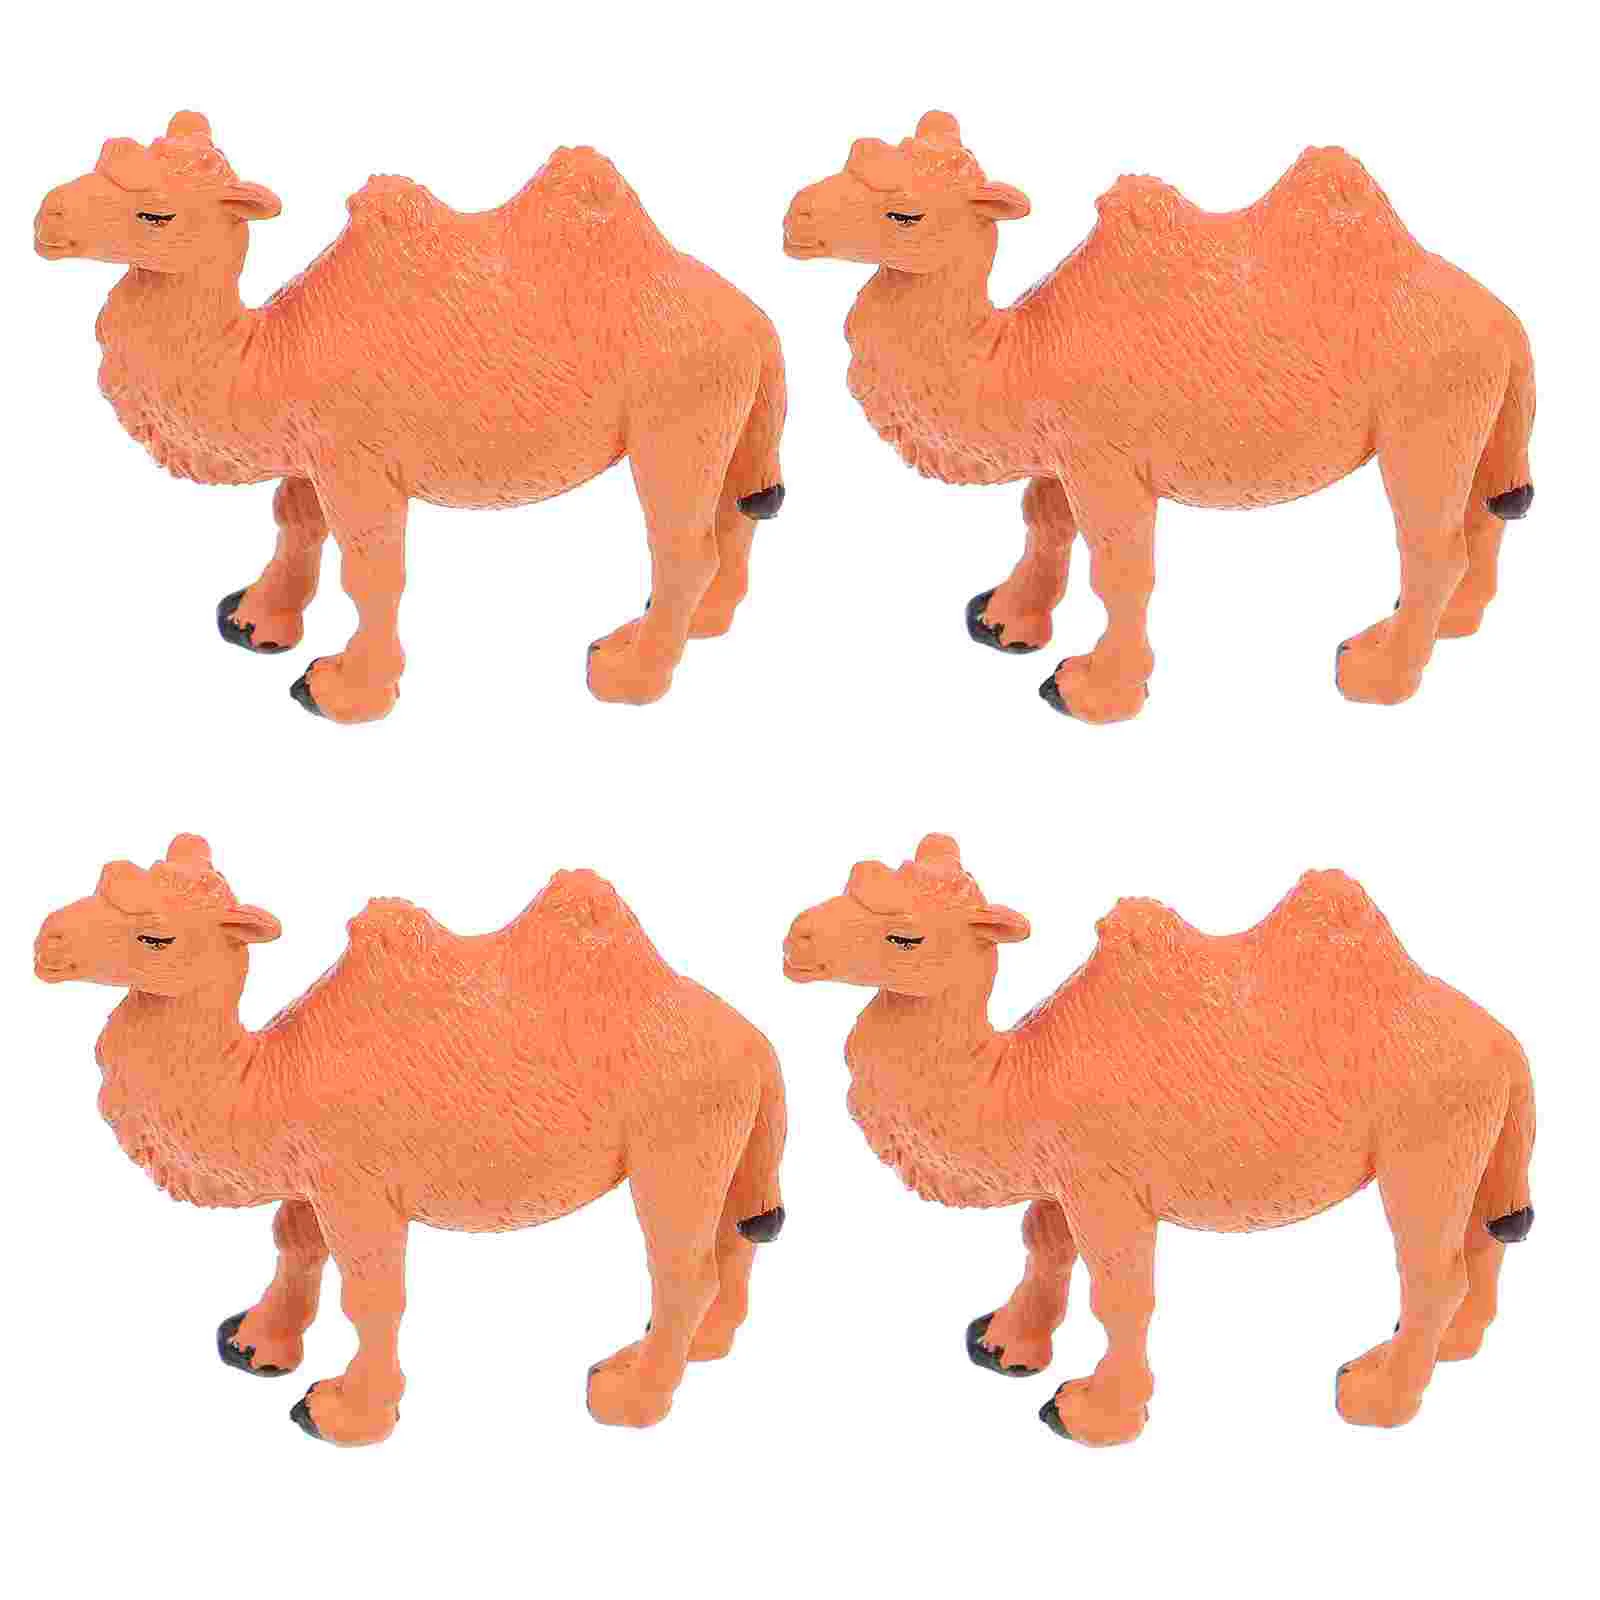 

Miniature Camel Models Simulation Camel Figurine Desert Wild Animal Statues Micro Landscape Desktop Ornaments Kids Toy